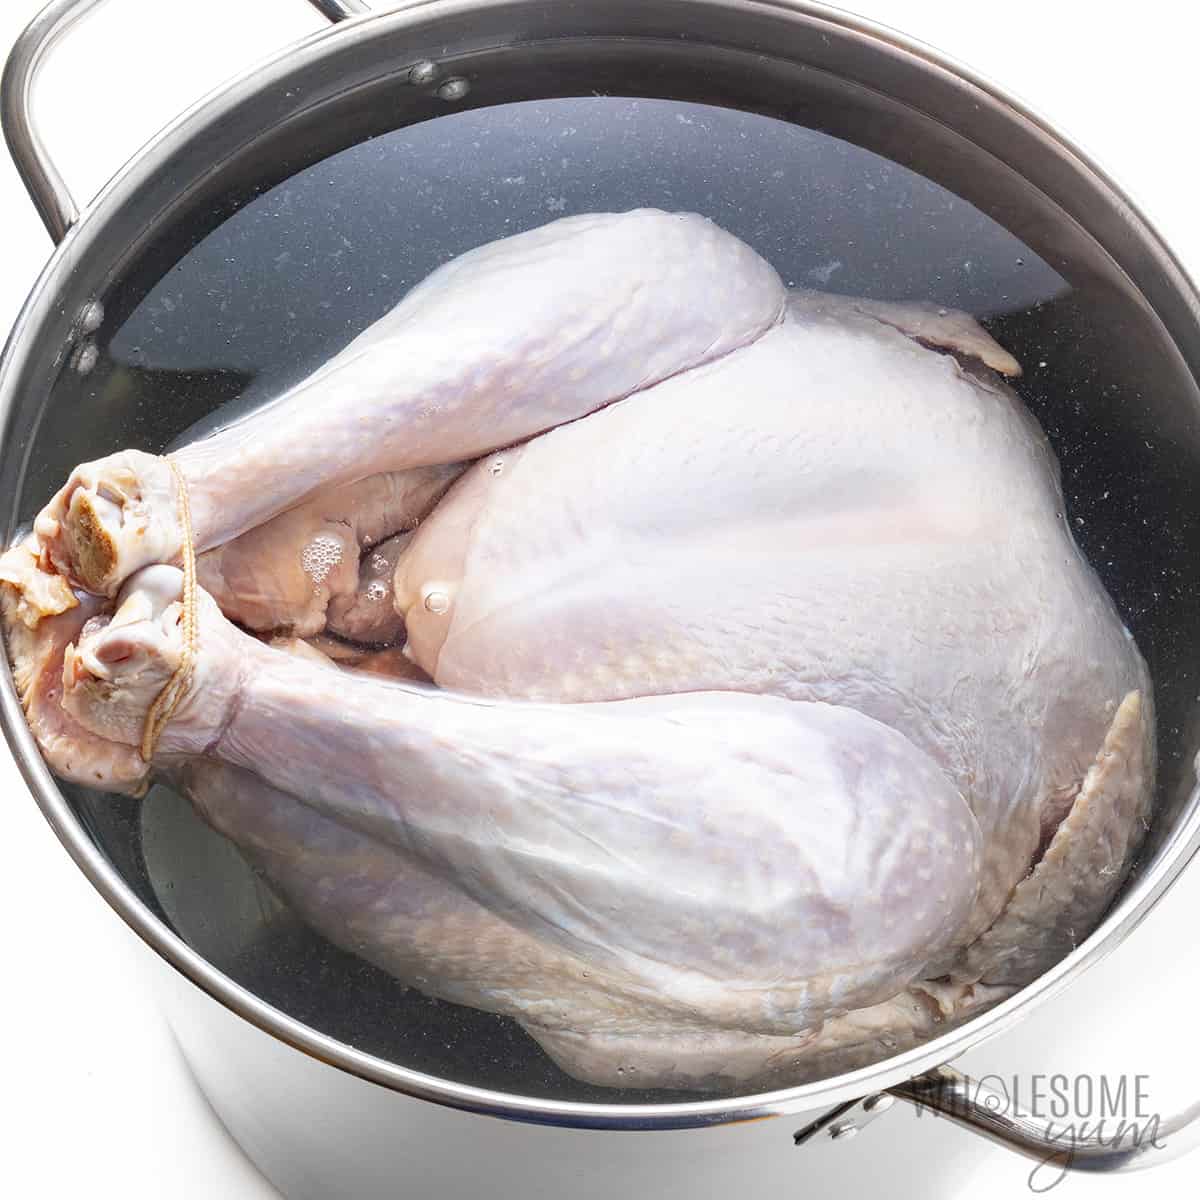 Brined turkey in pot